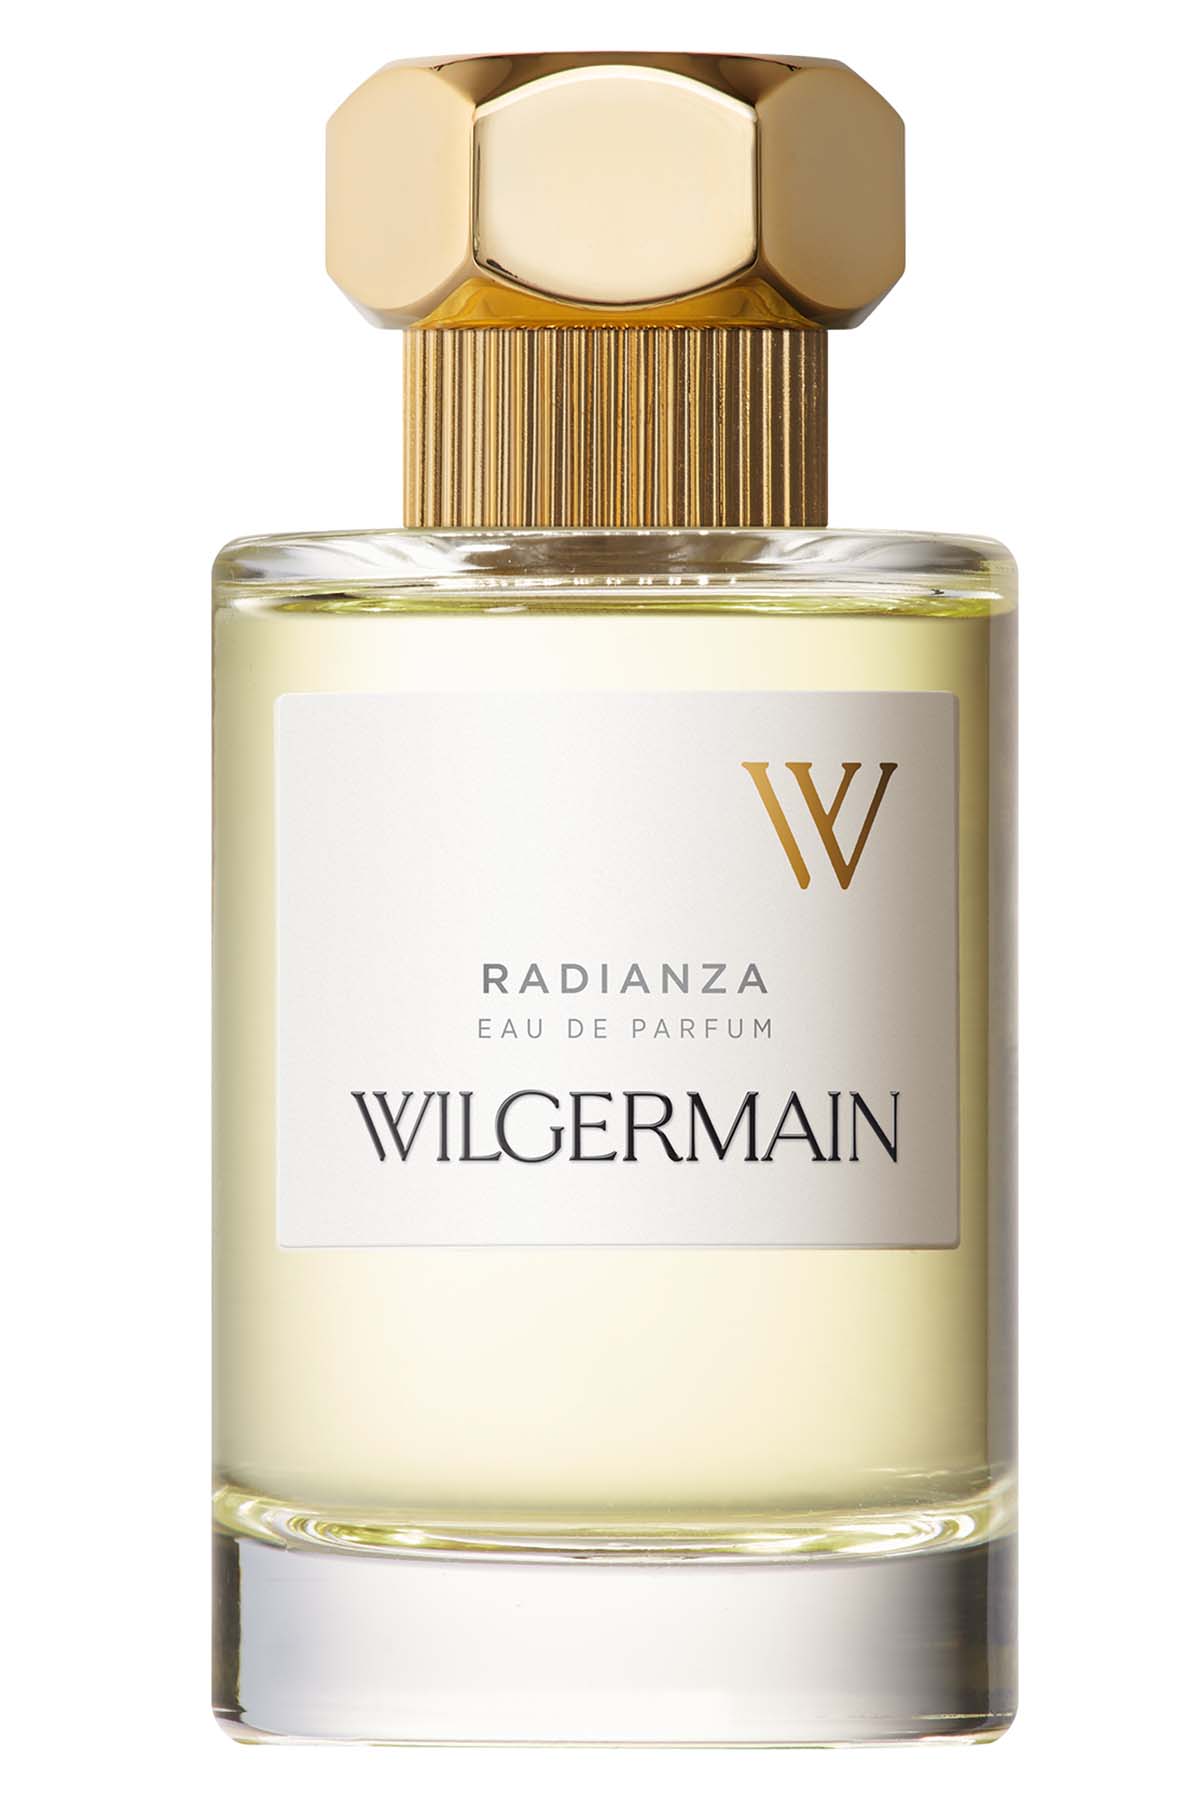 Wilgermain Radianza Eau de Parfum